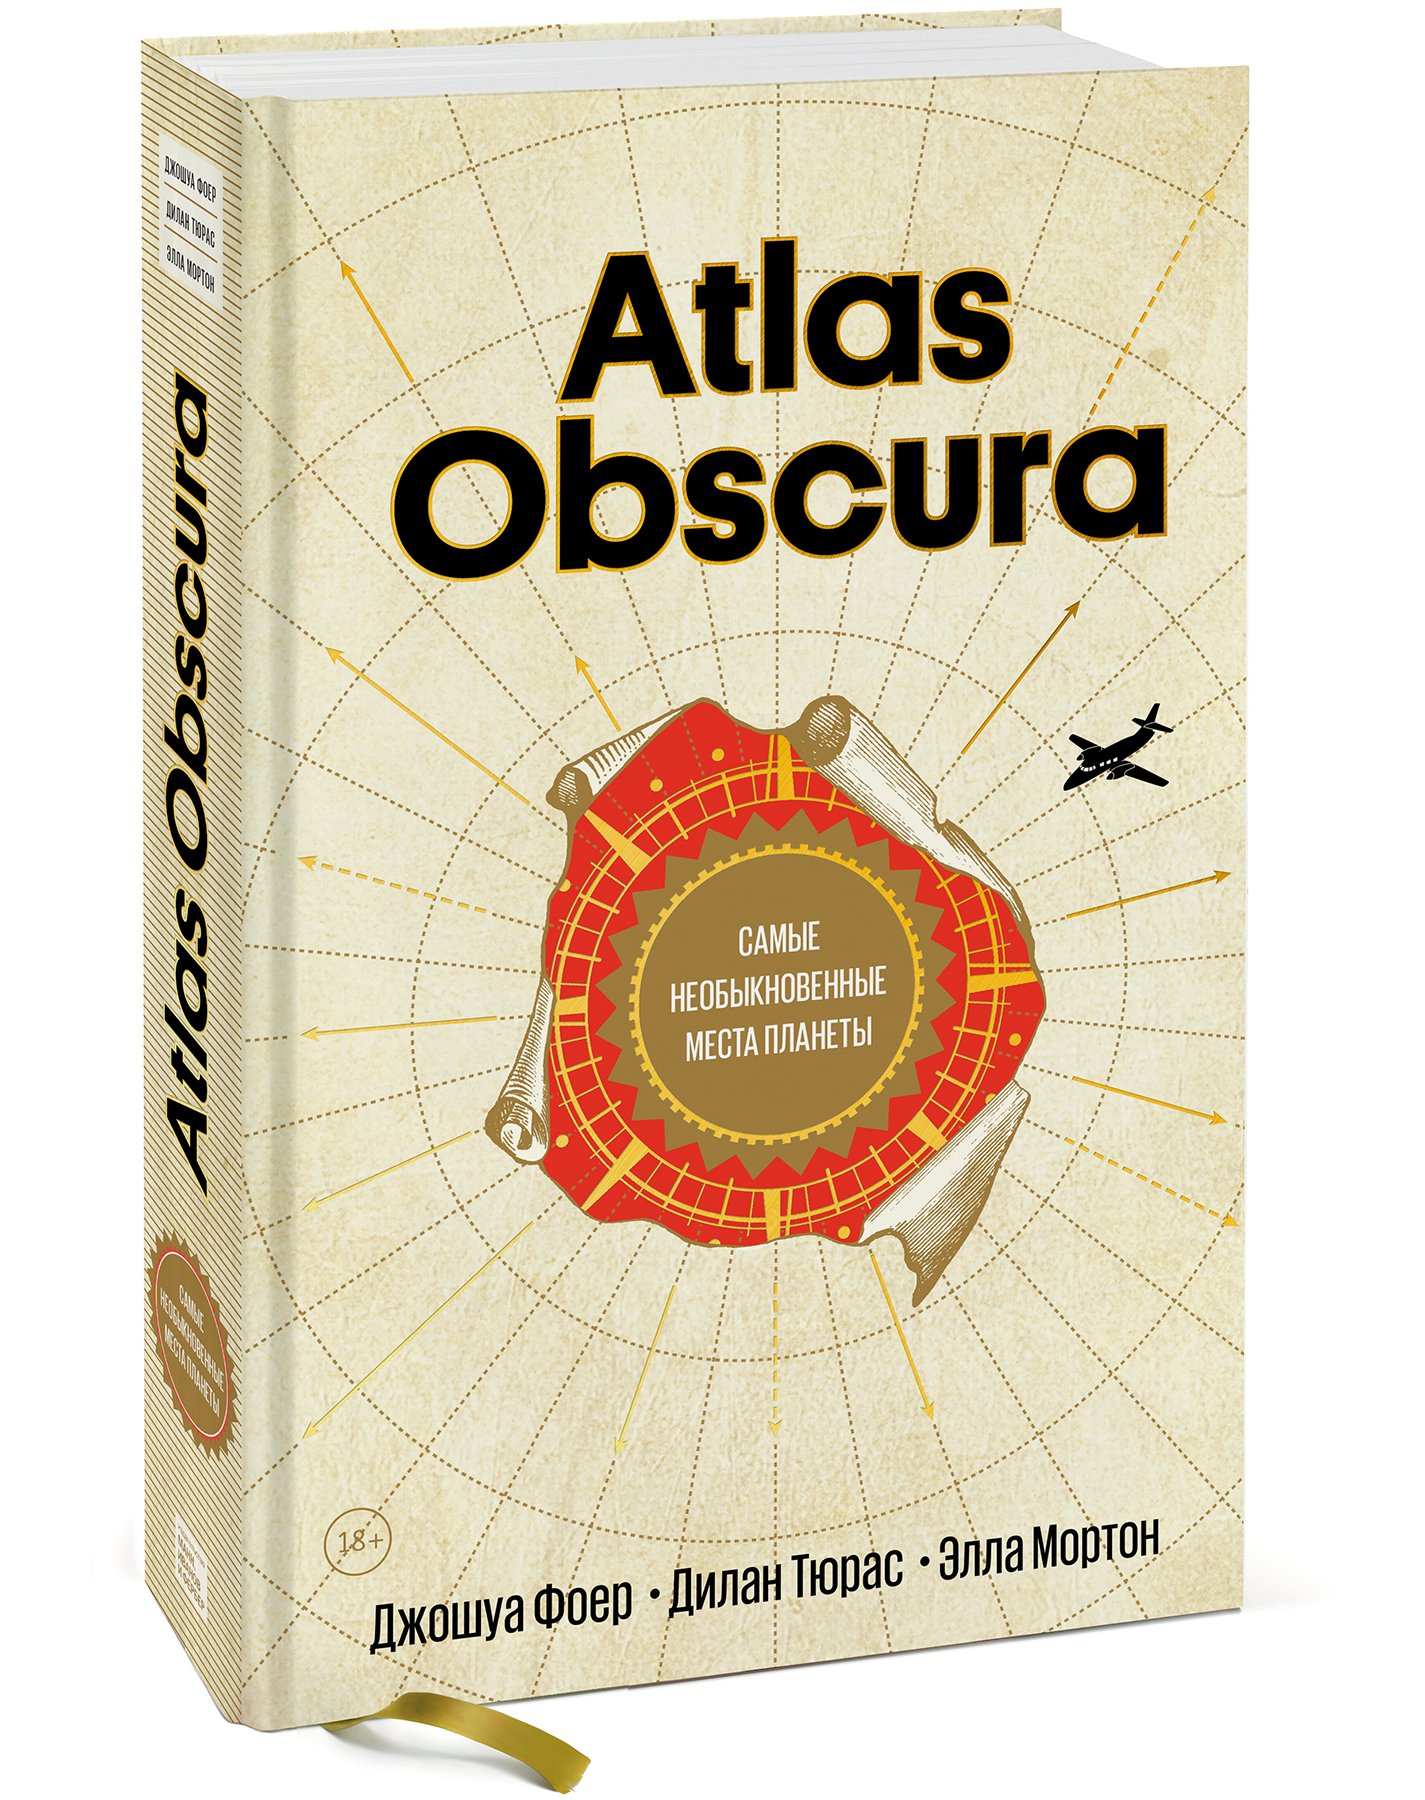 Atlas obscura oslo